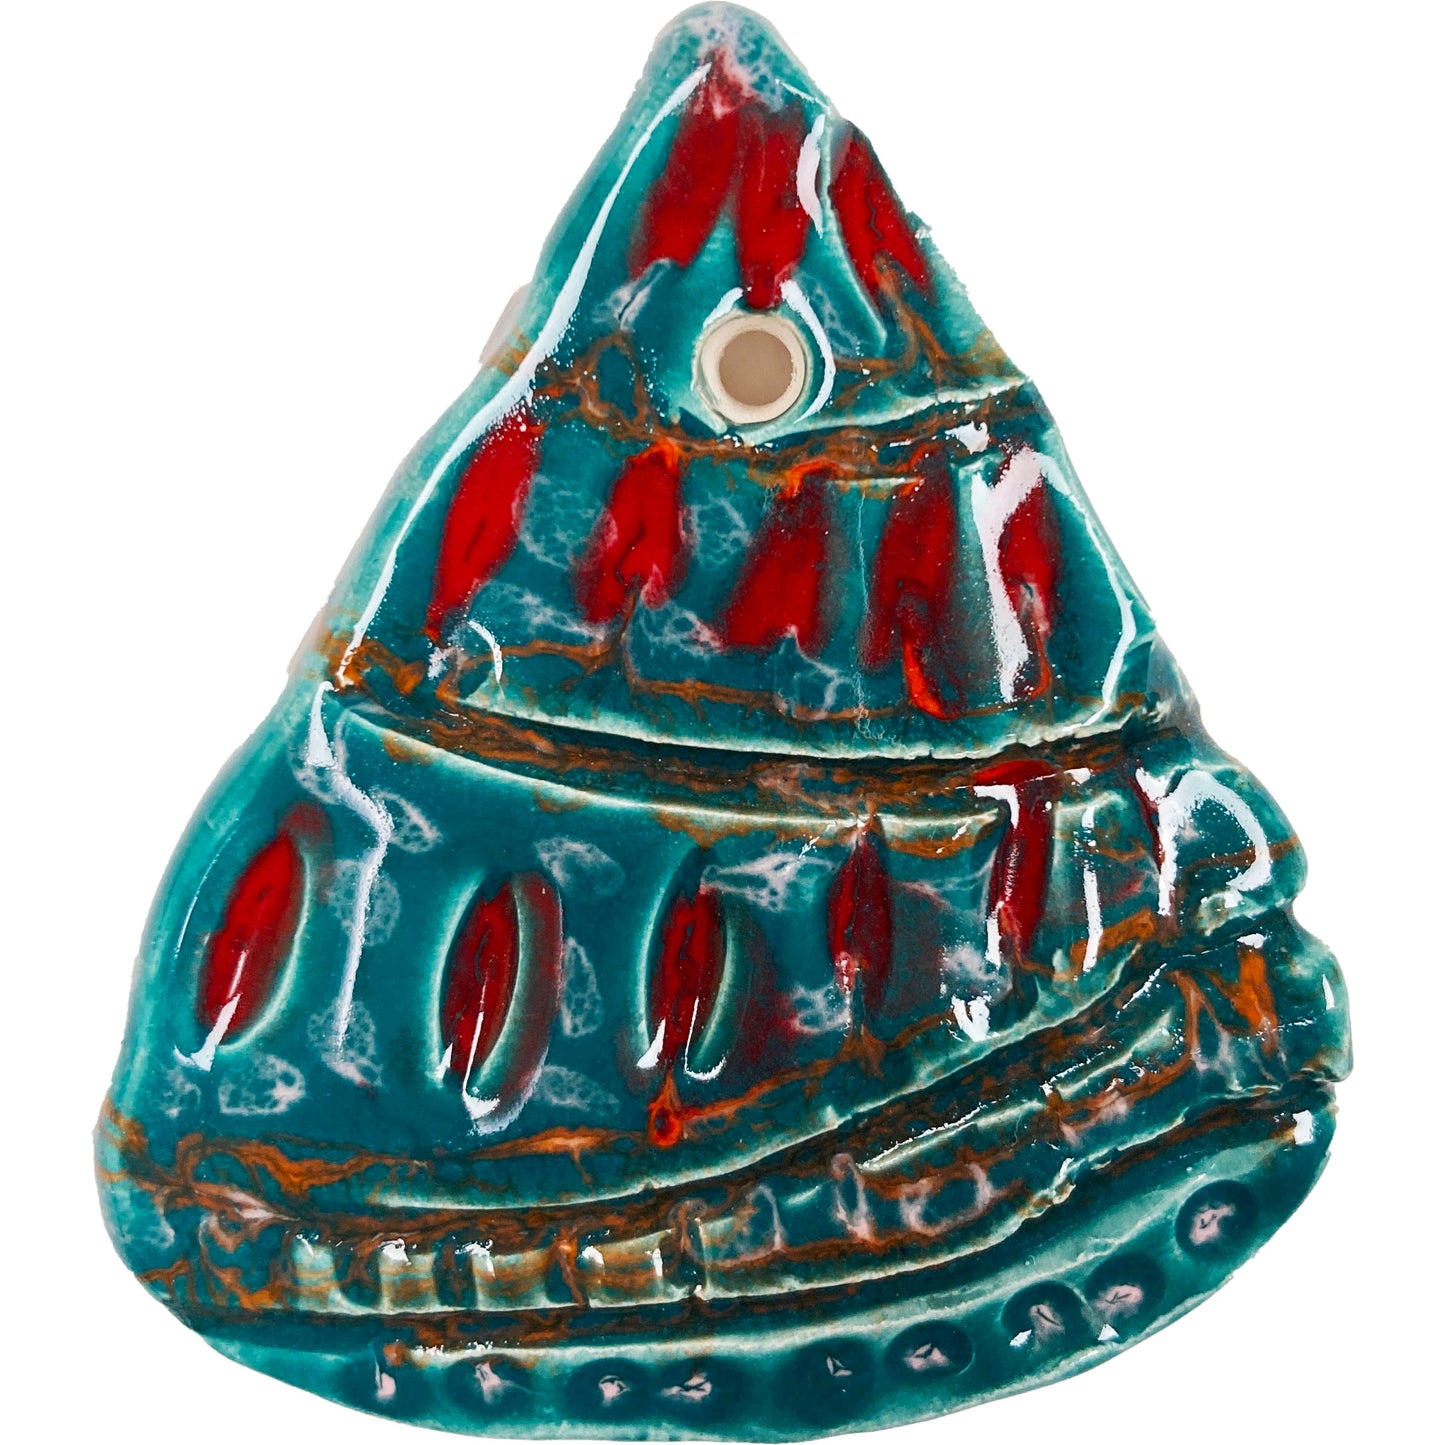 WATCH Resources Art Guild - Ceramic Arts Handmade Clay Crafts Fresh Fish 2.5-inch x 2.5-inch Glazed Shell by Morgan Fox